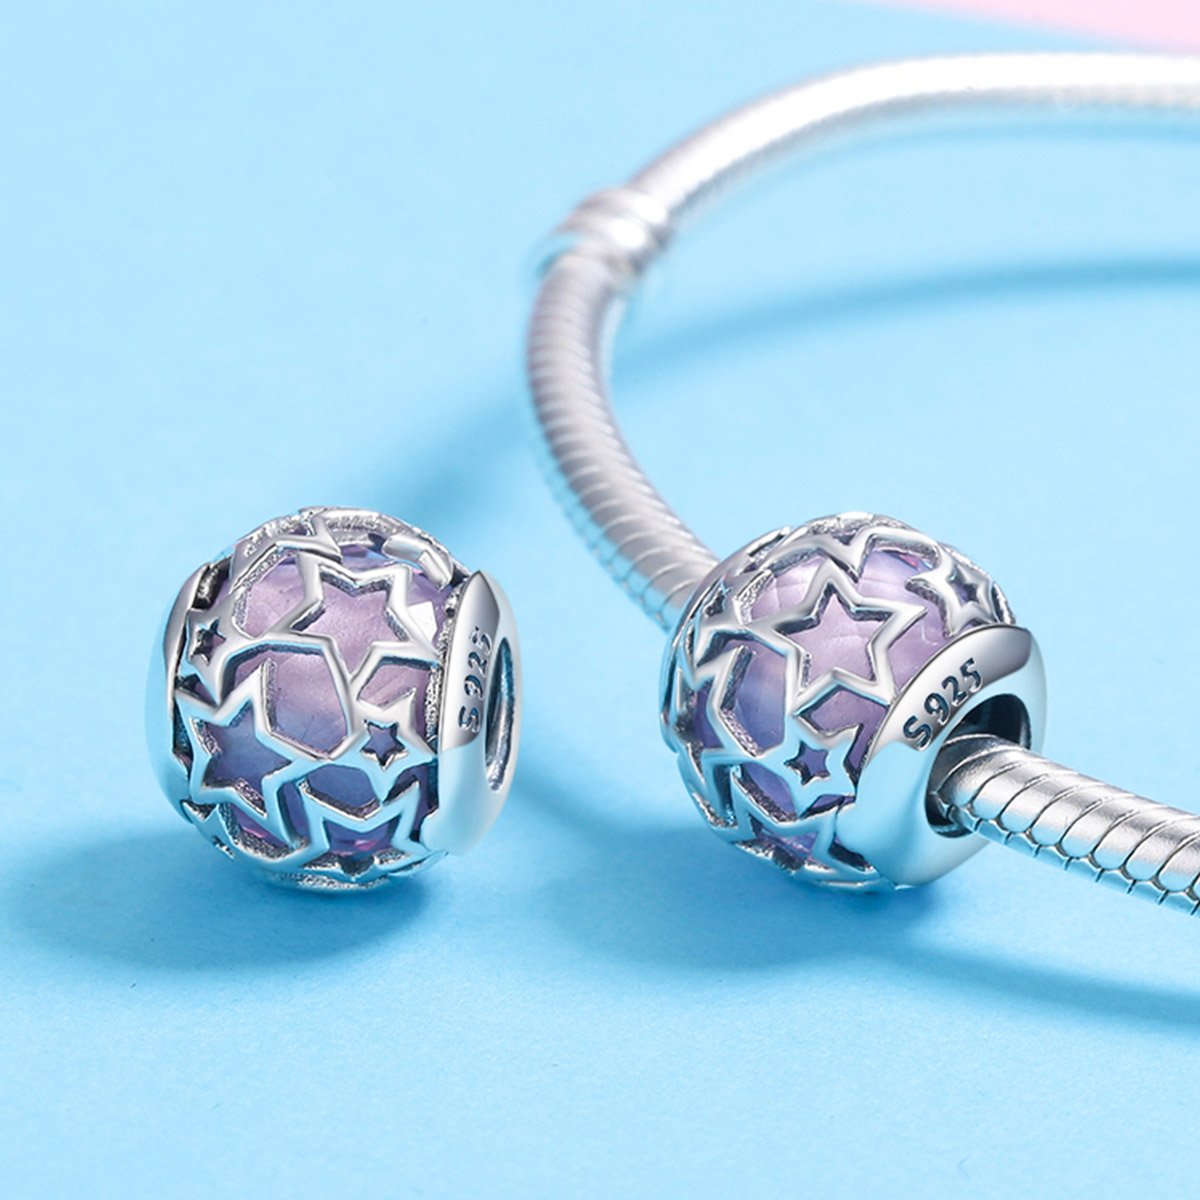 Sterling 925 silver charm the pink stars bead pendant fits Pandora charm and European charm bracelet Xaxe.com